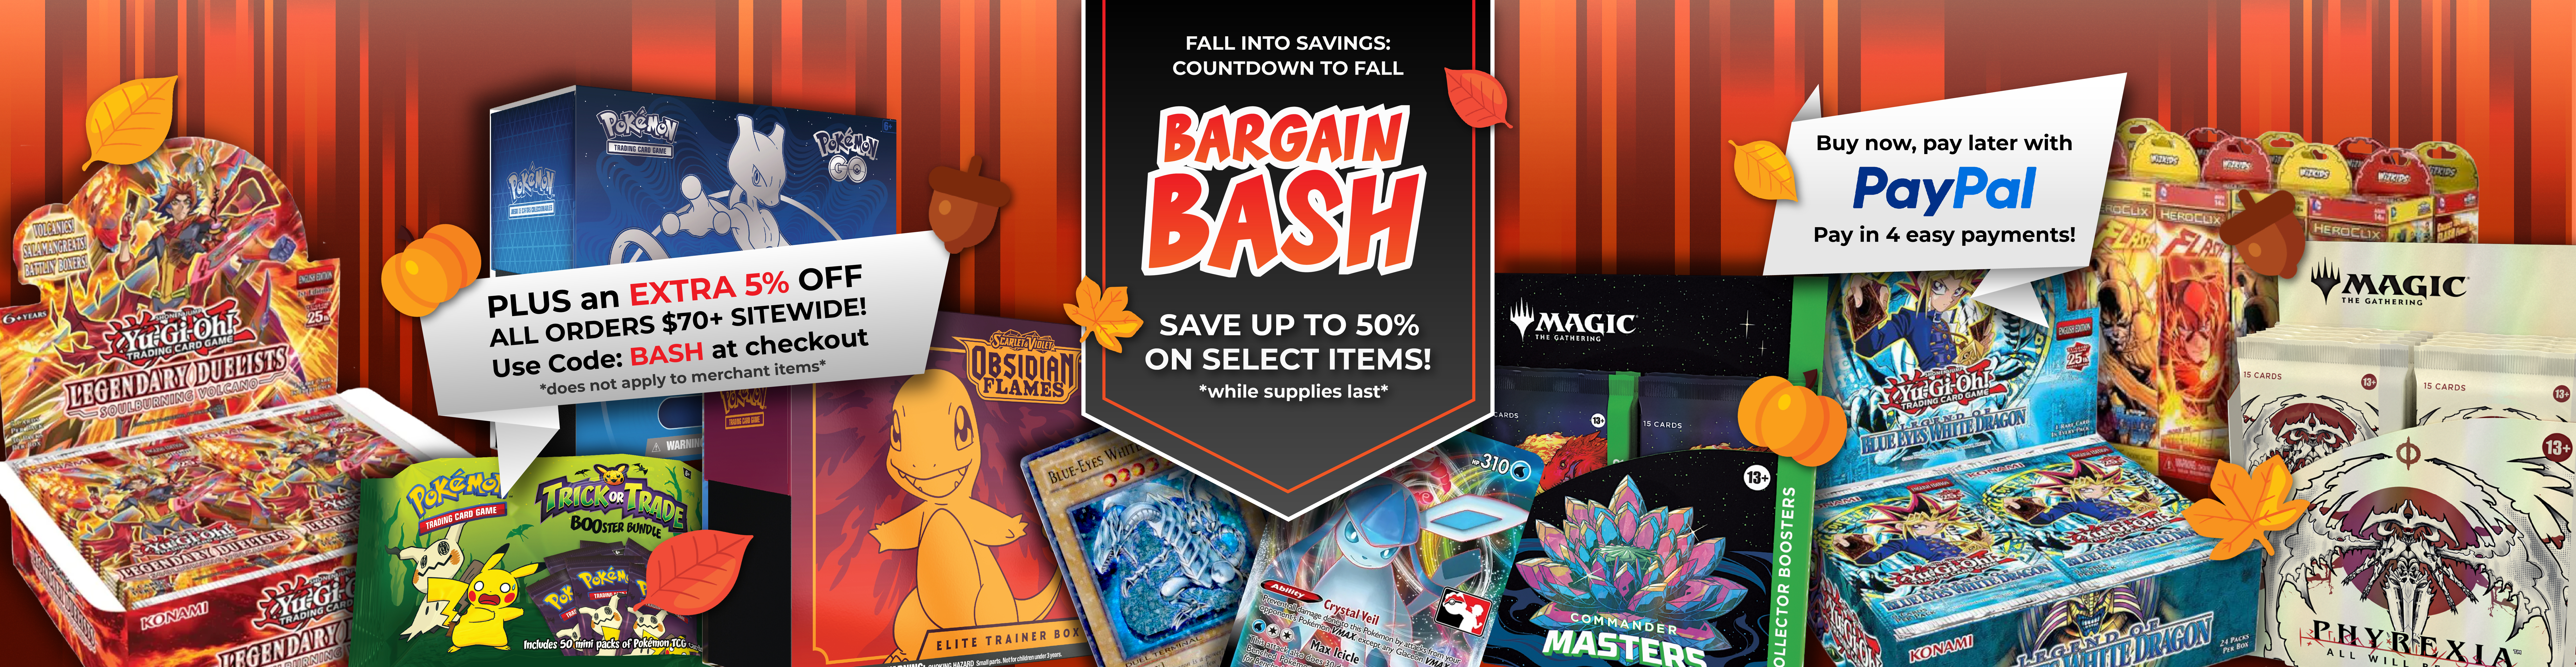 Fall Bargain Bash